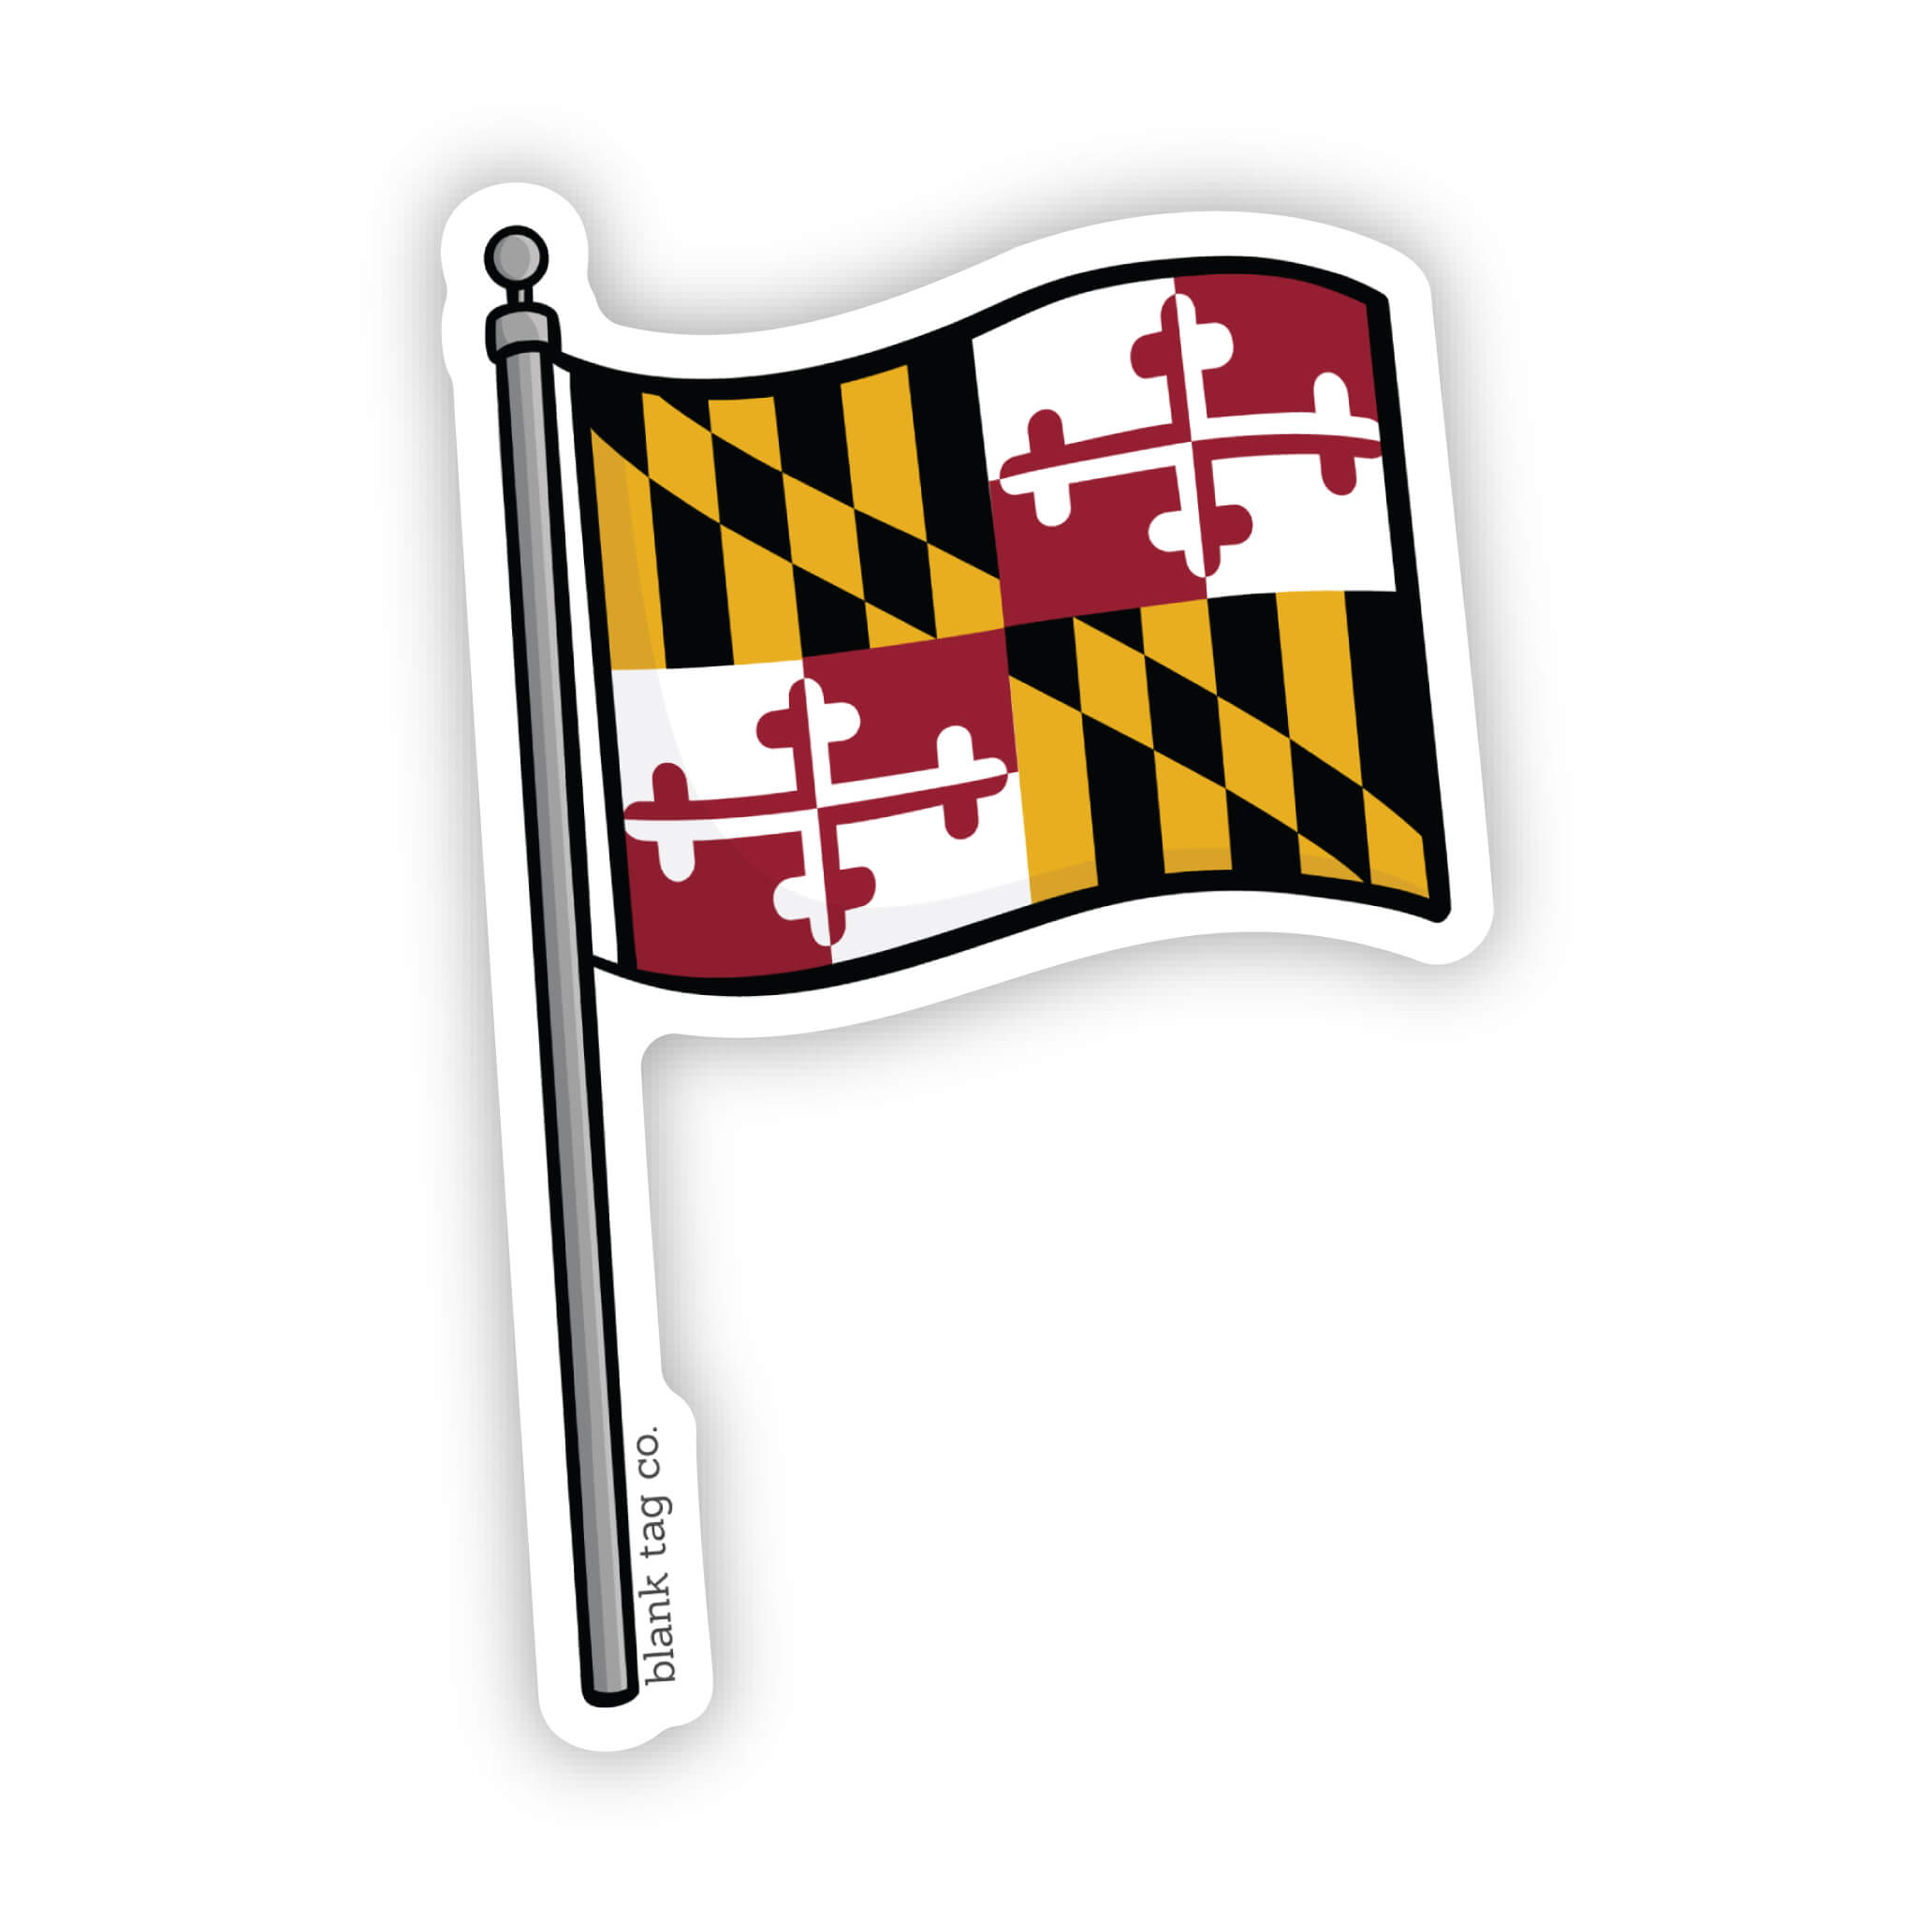 The Maryland Flag Sticker